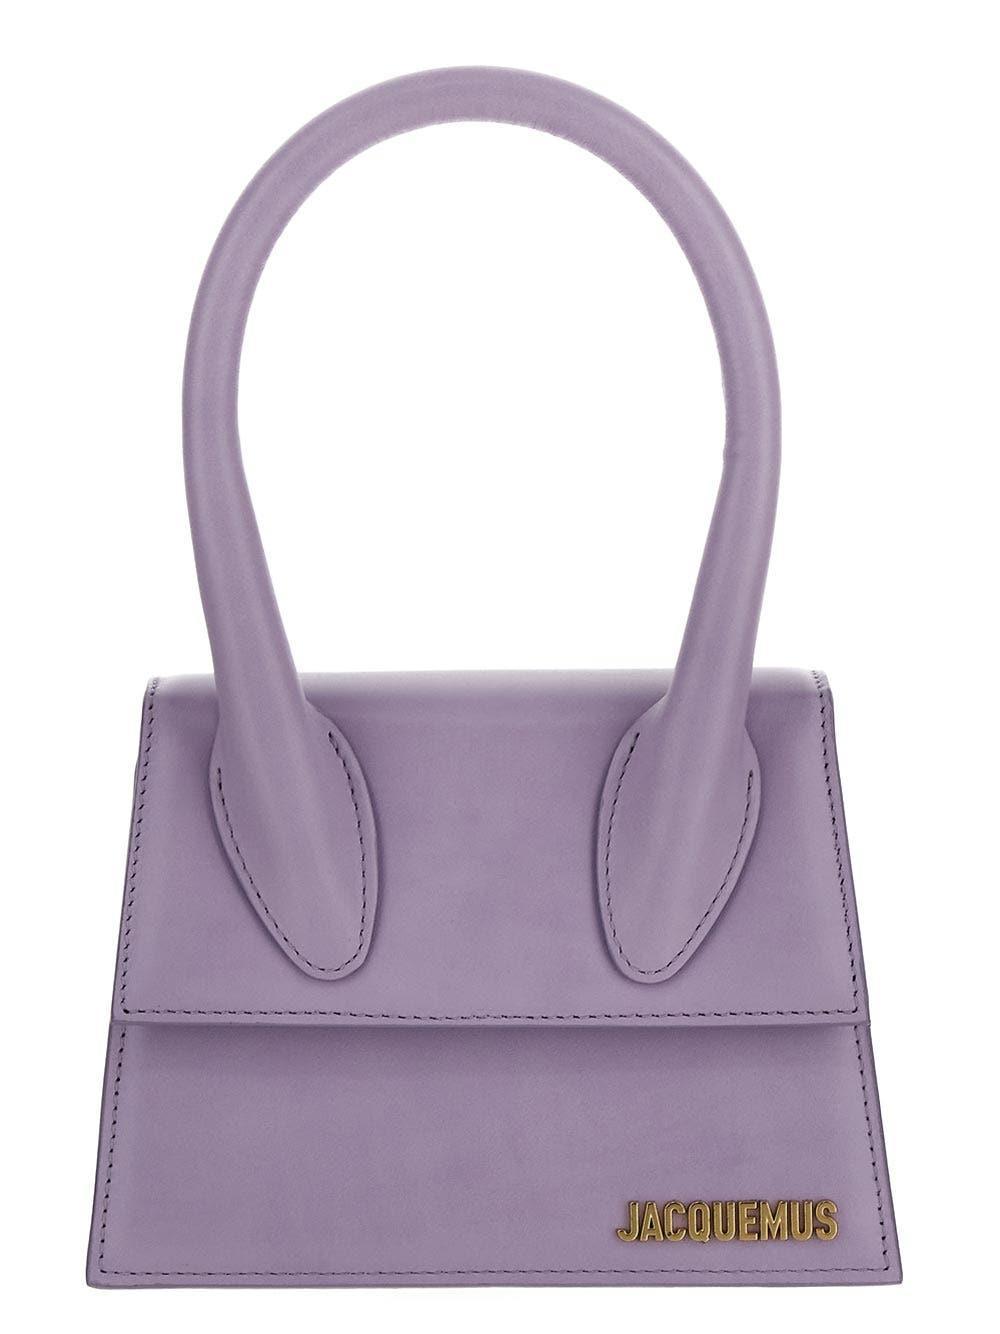 Jacquemus Le Chiquito Moyen Handbag in Purple | Lyst